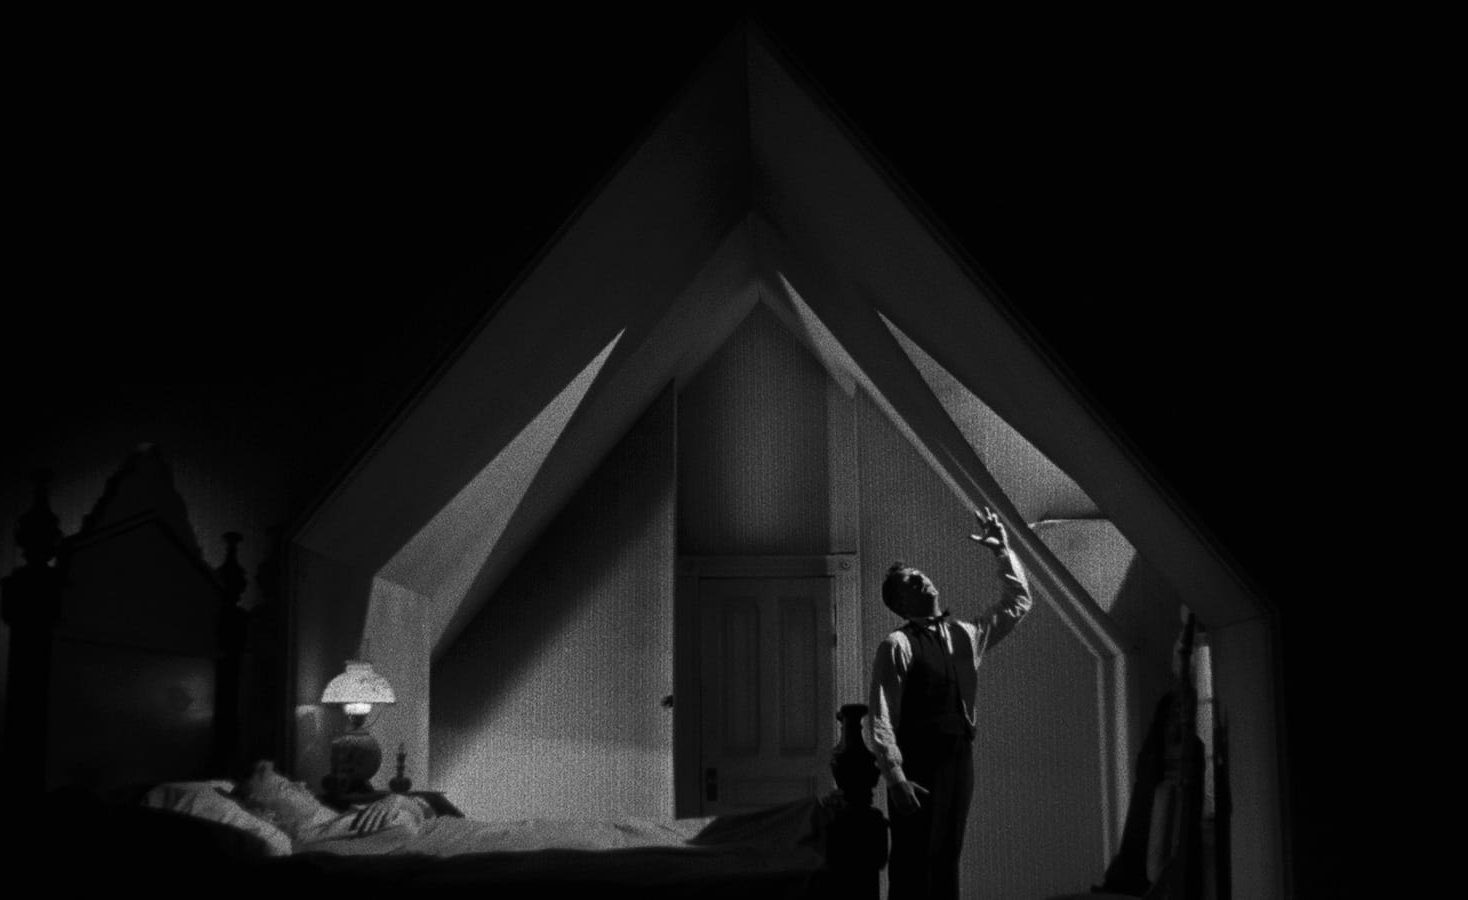 Robert Mitchum Using a Silent Film Era Acting Style